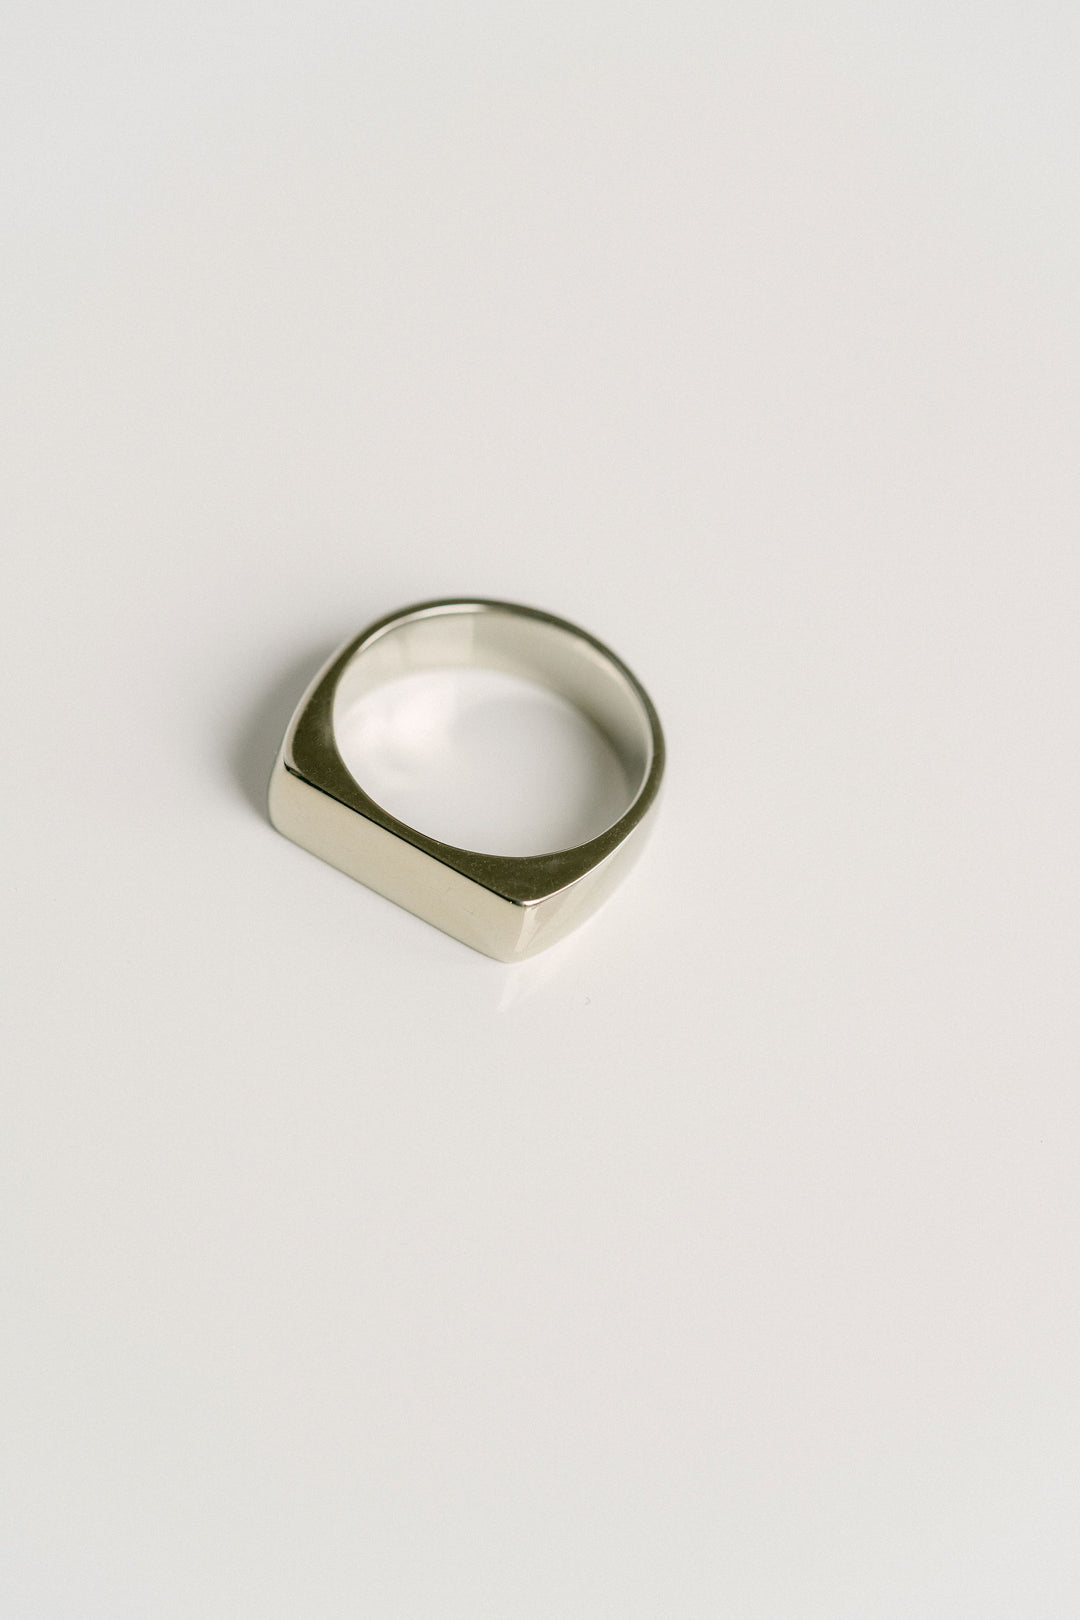 Polished Mens Signet Ring, 14k White Gold